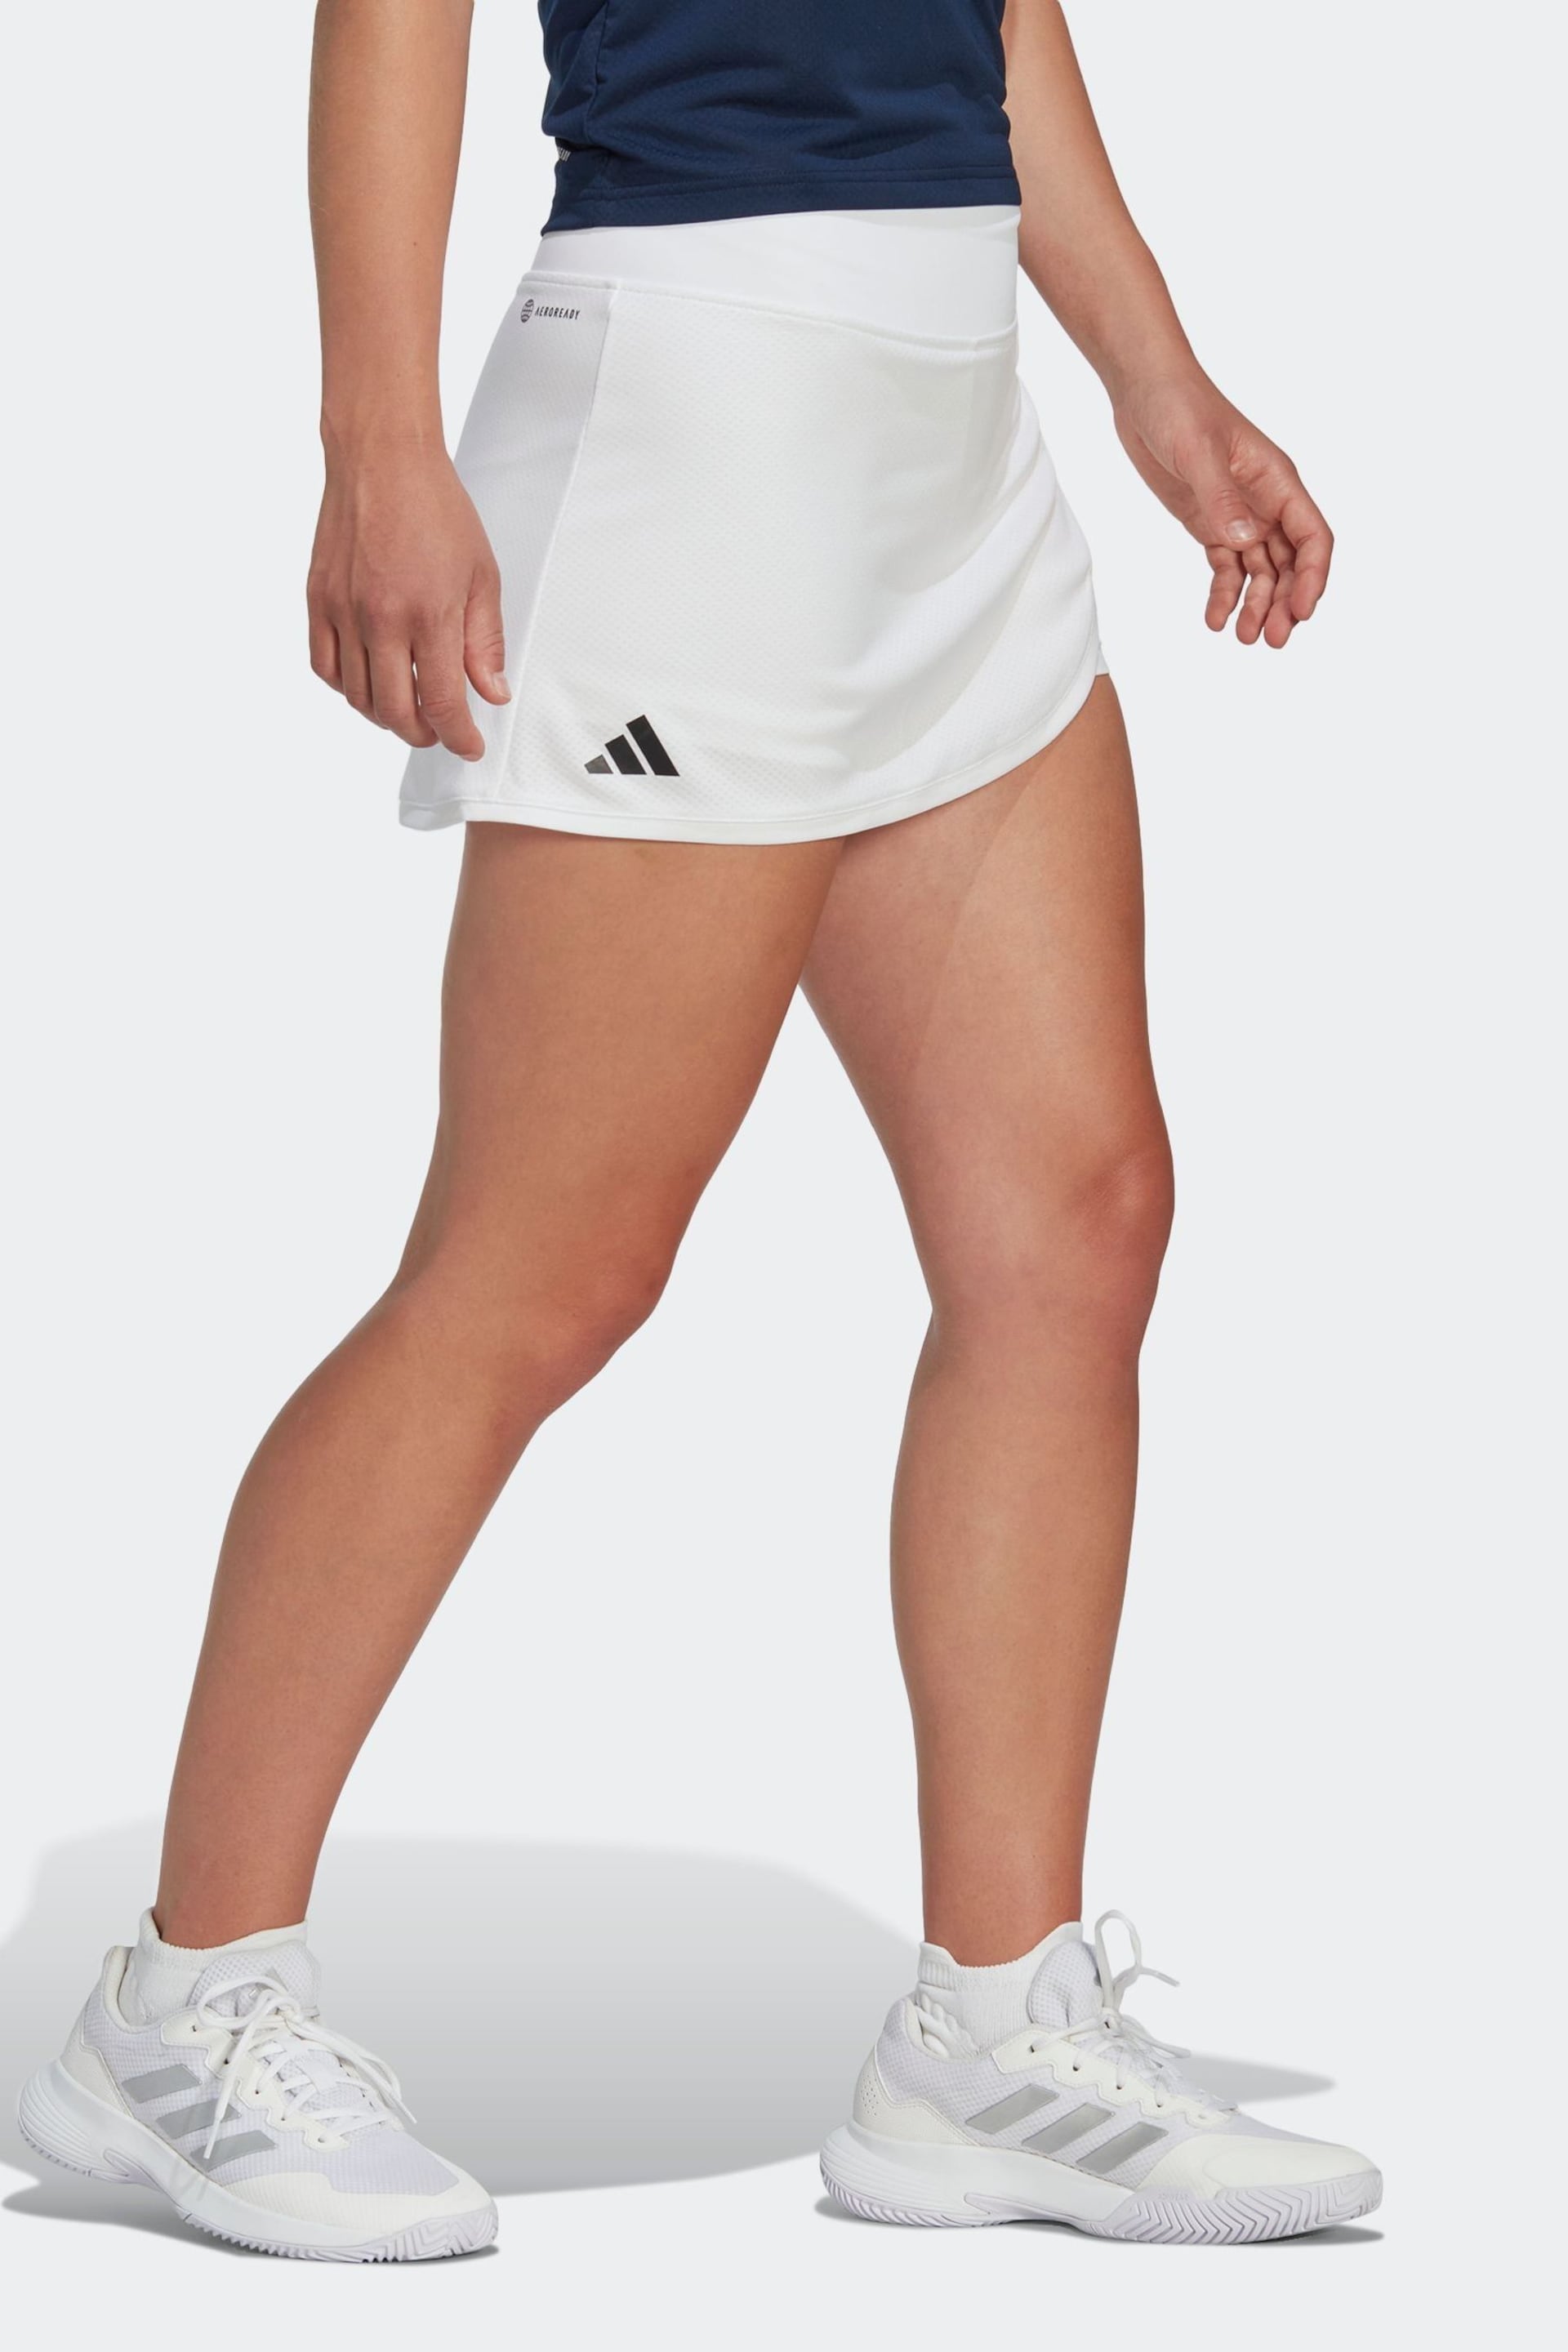 adidas White Tennis Club Skirt - Image 3 of 6